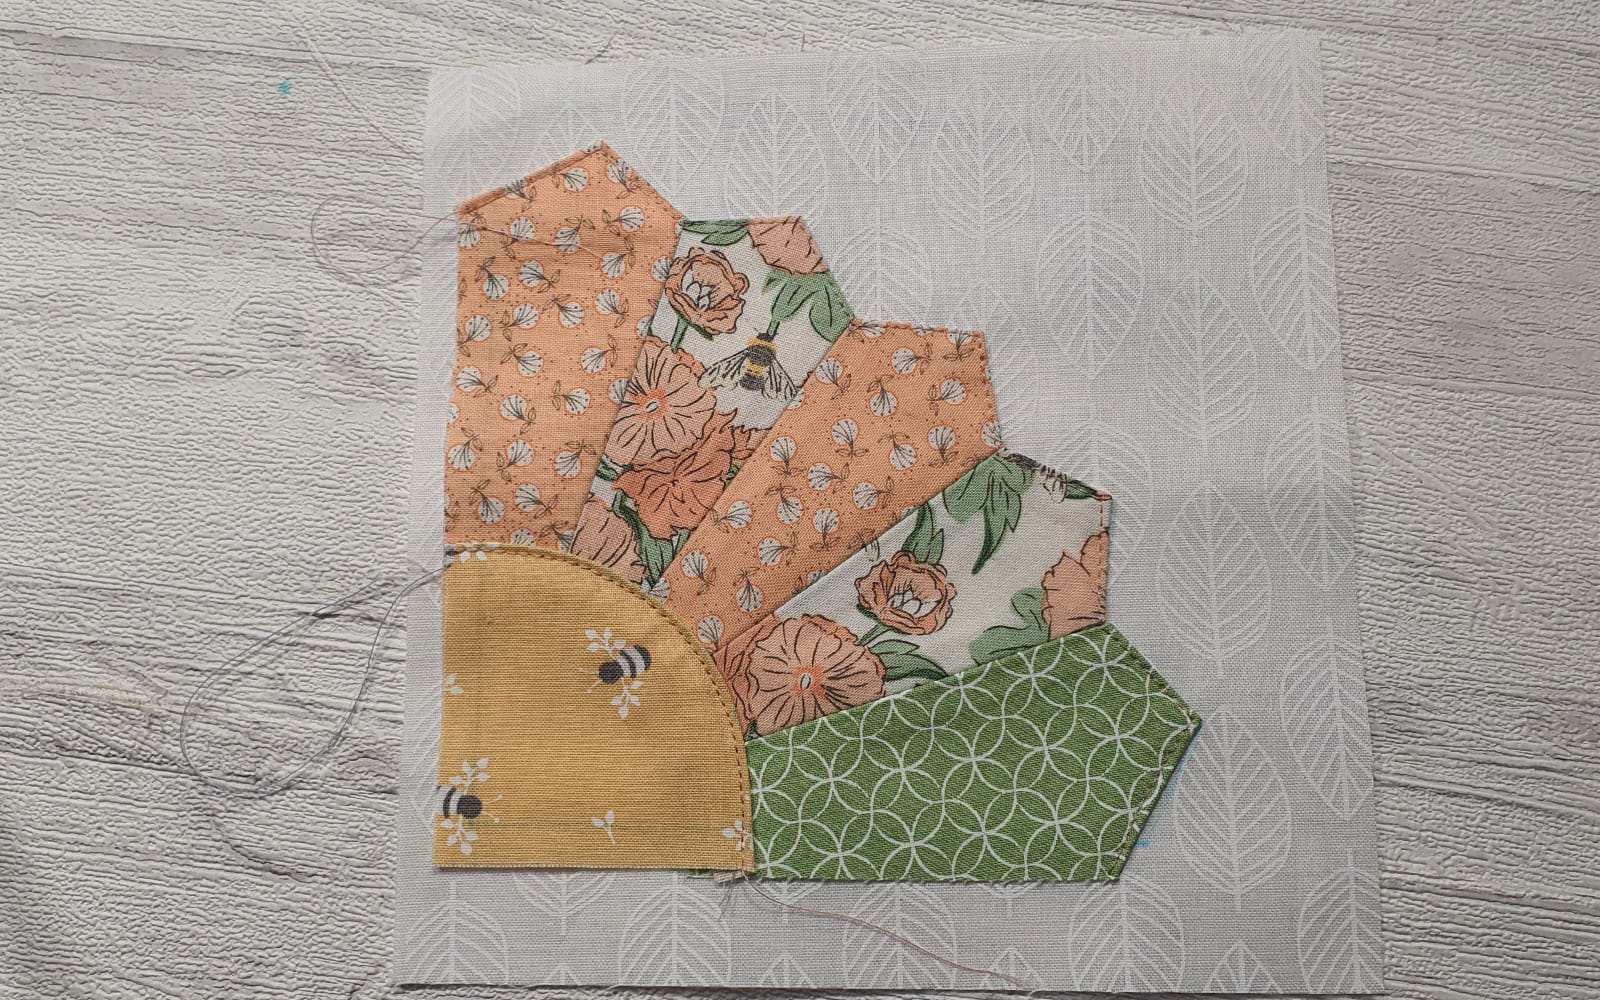 Dresden fan half sewn on fabric